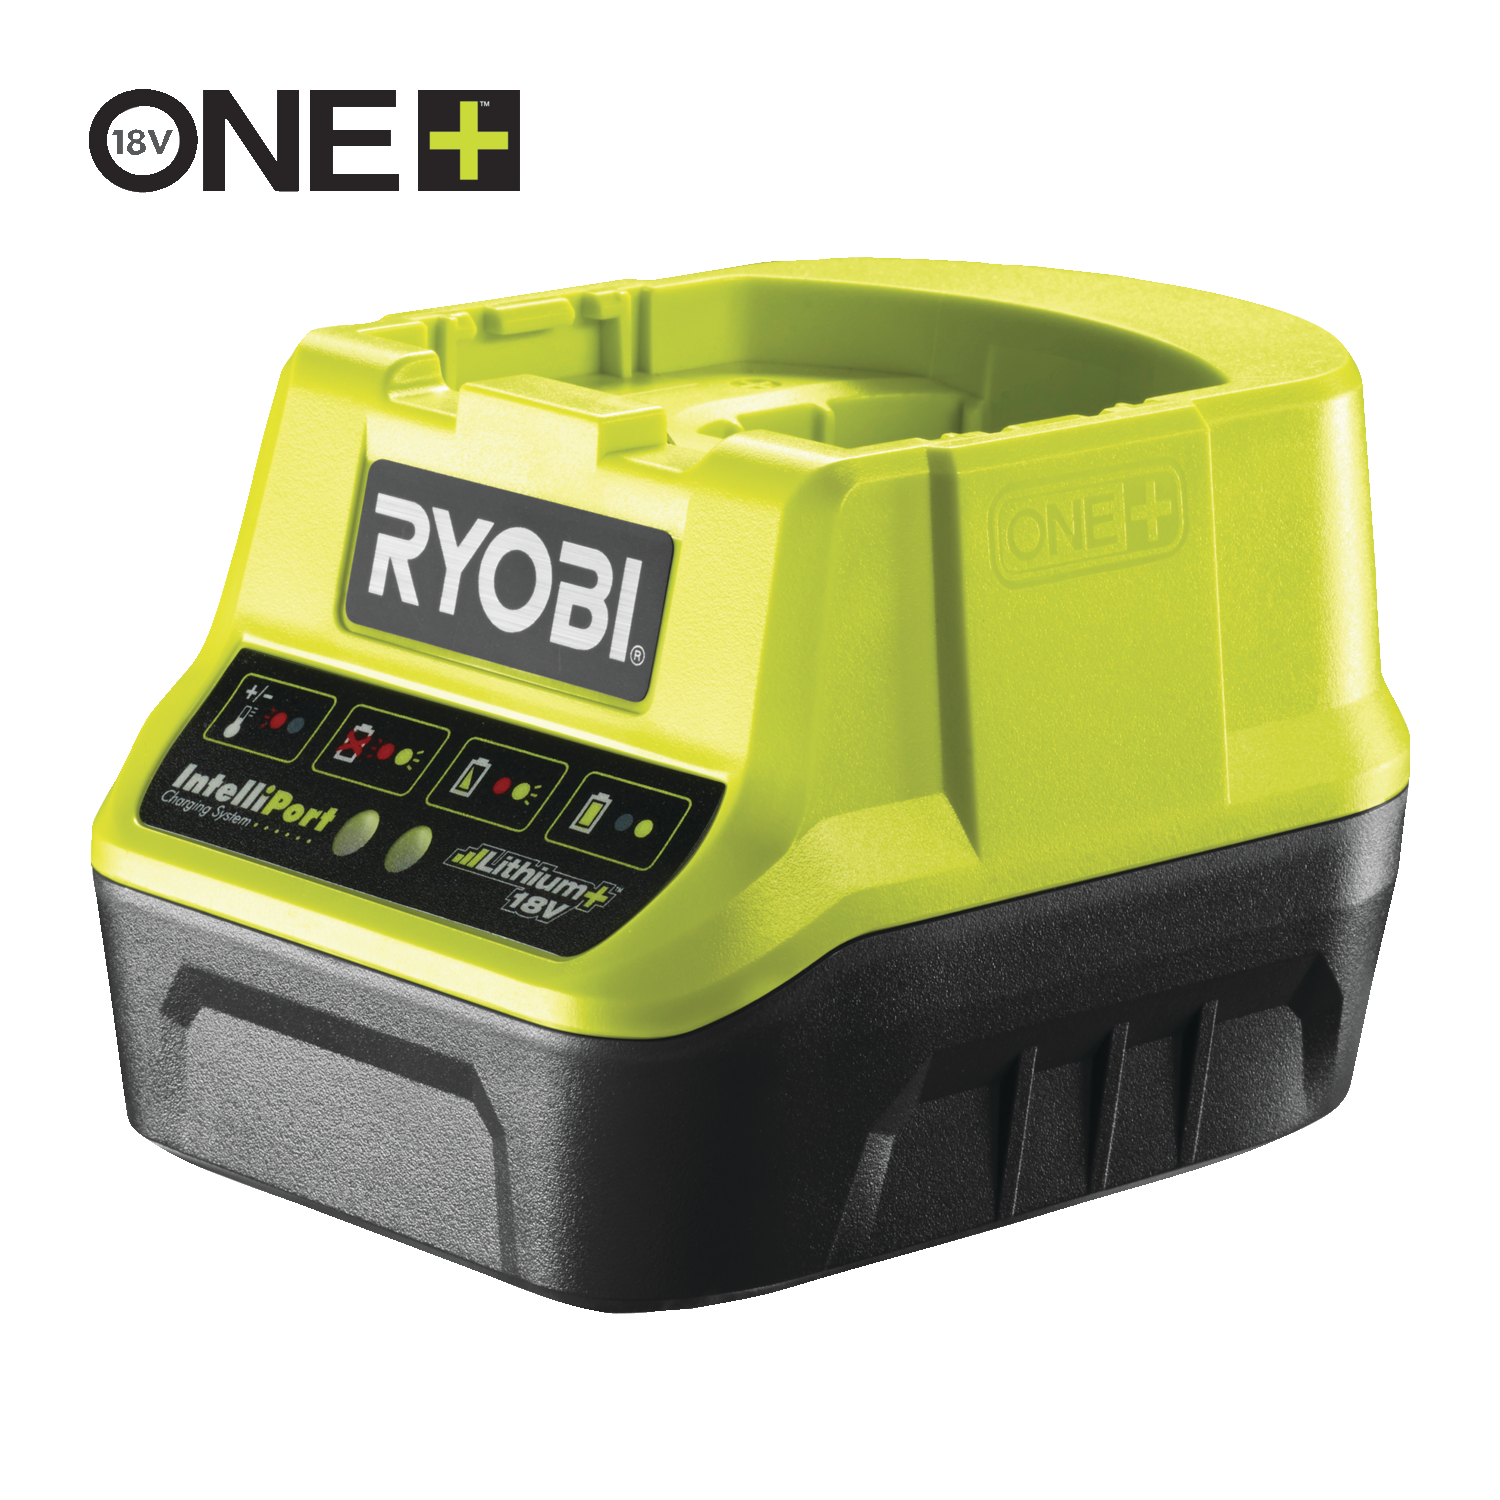 Ryobi RB18L50 ONE+ Batterie au lithium 5 Ah 18 V - Multicolore